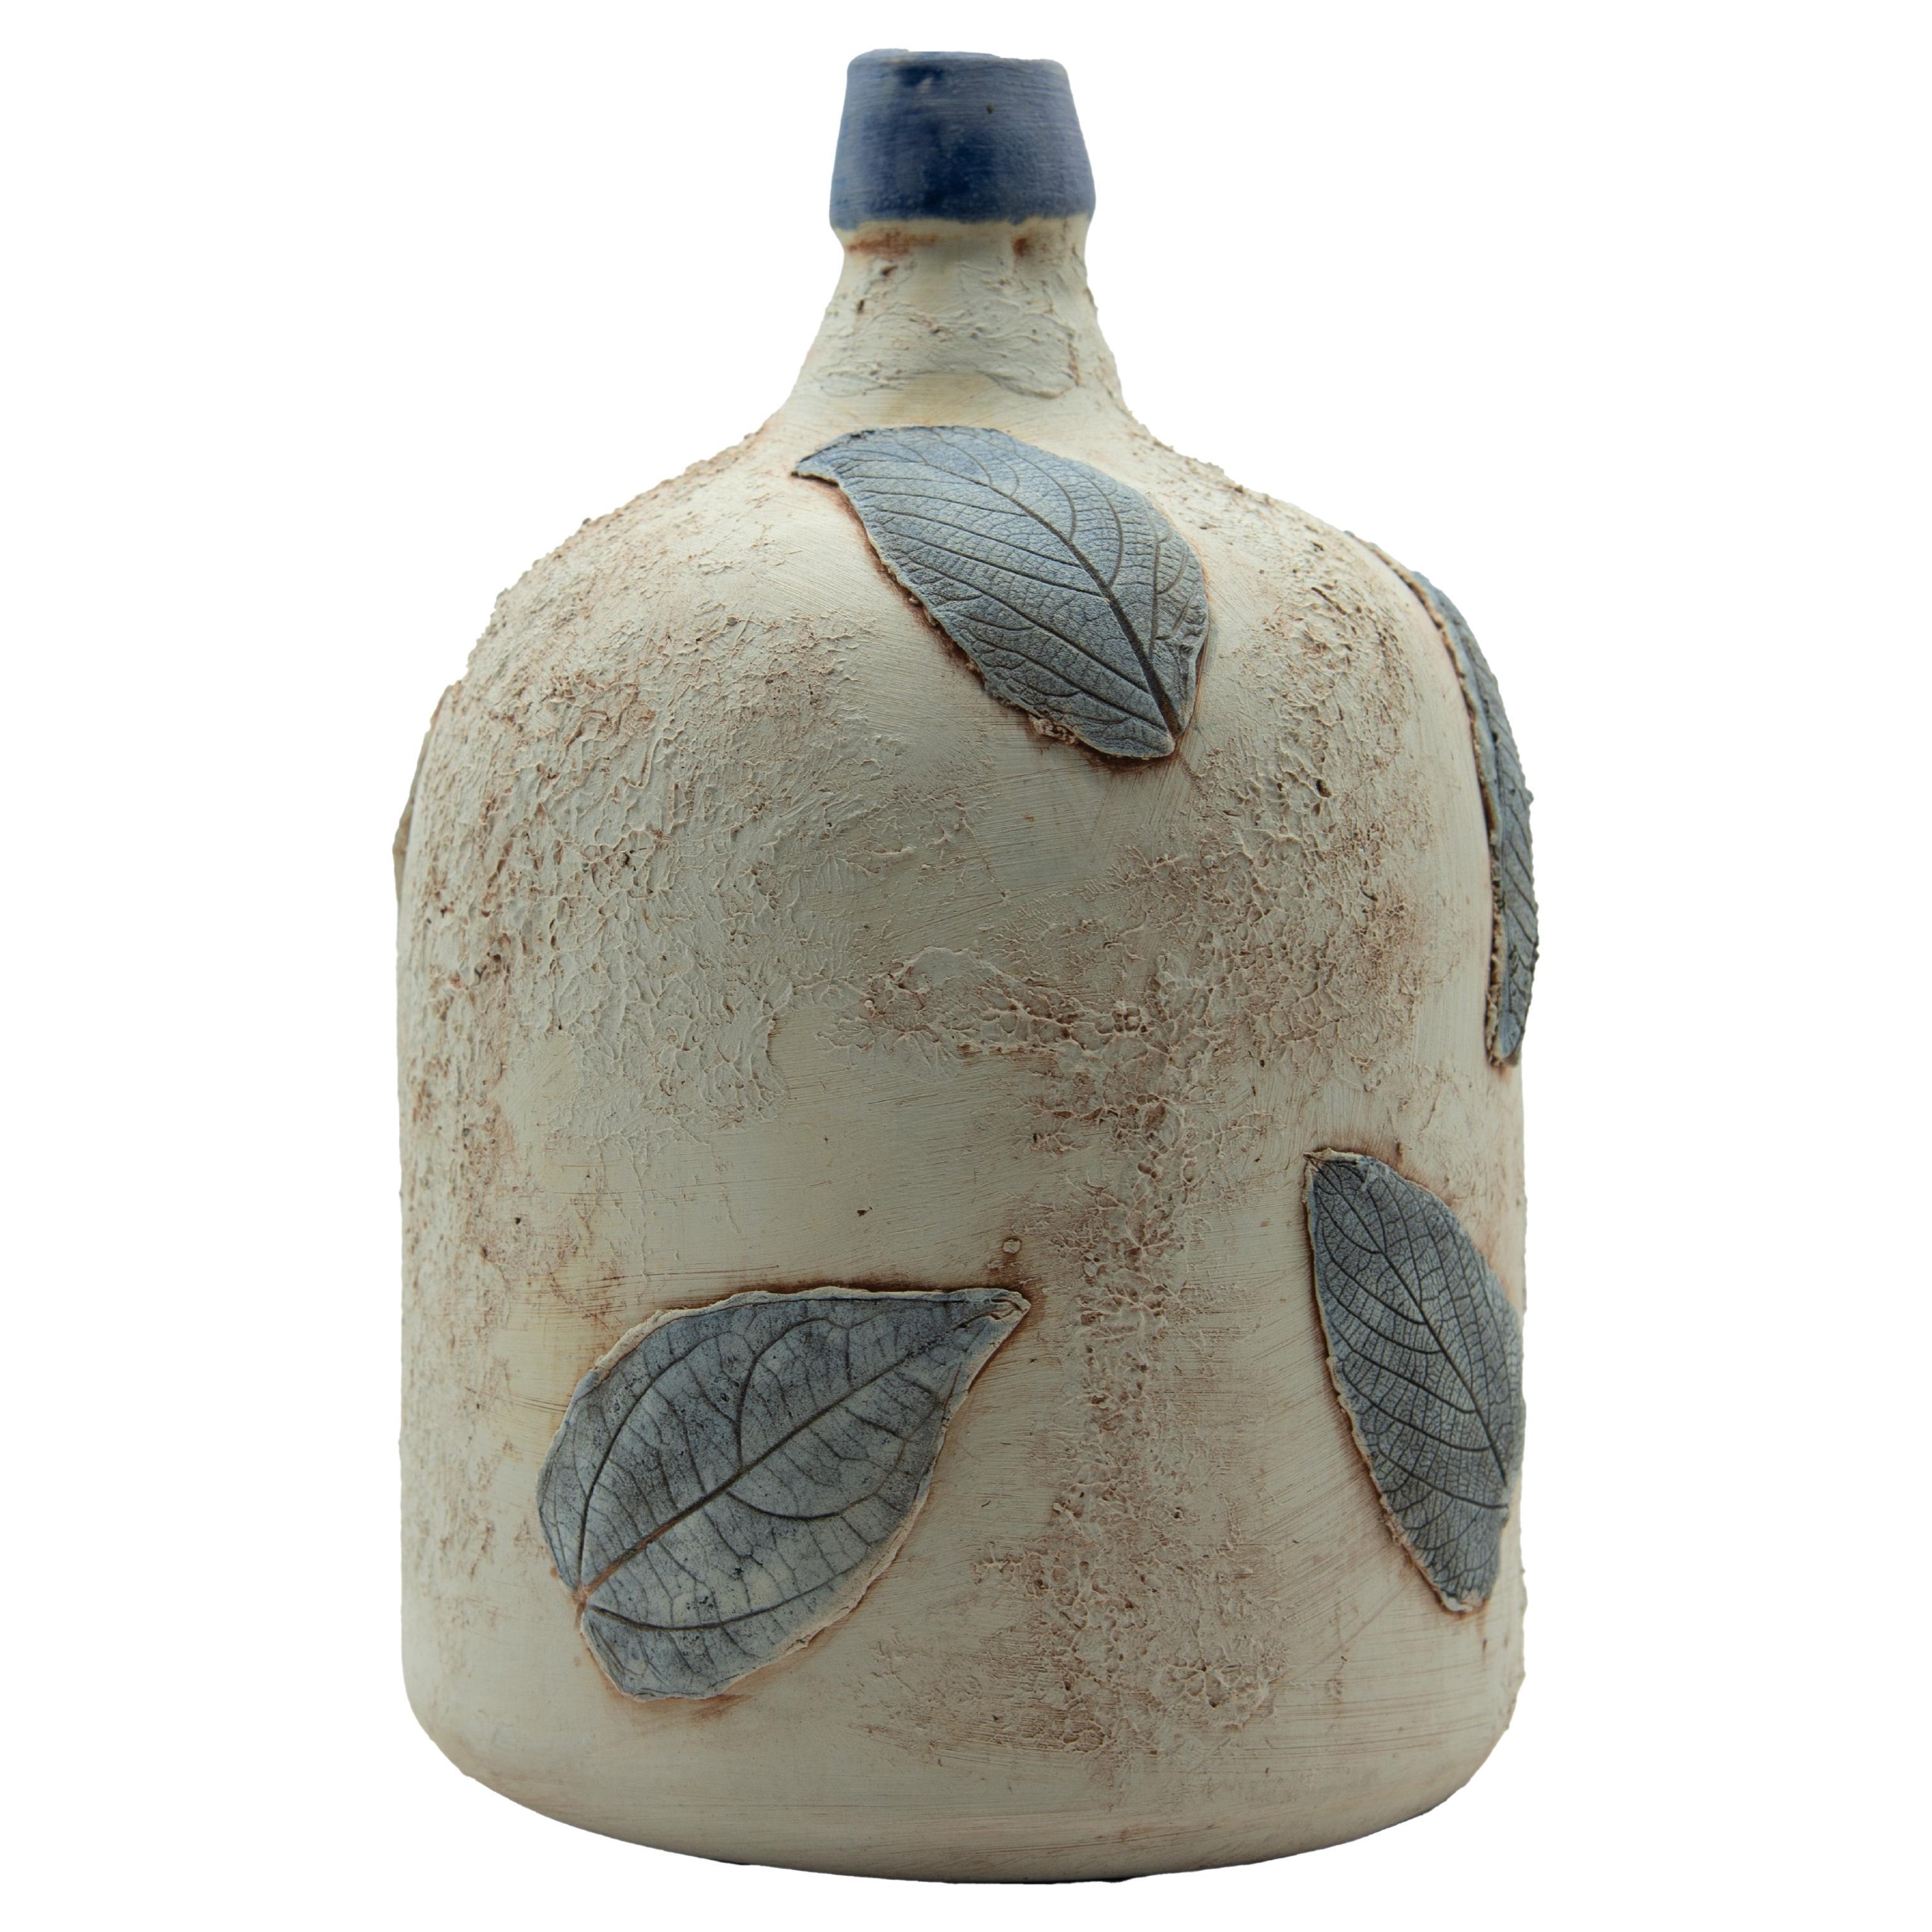 Handmade Mezcal Vessel Clay with Leaf Prints Fossil Like Ceramic Organic Modern